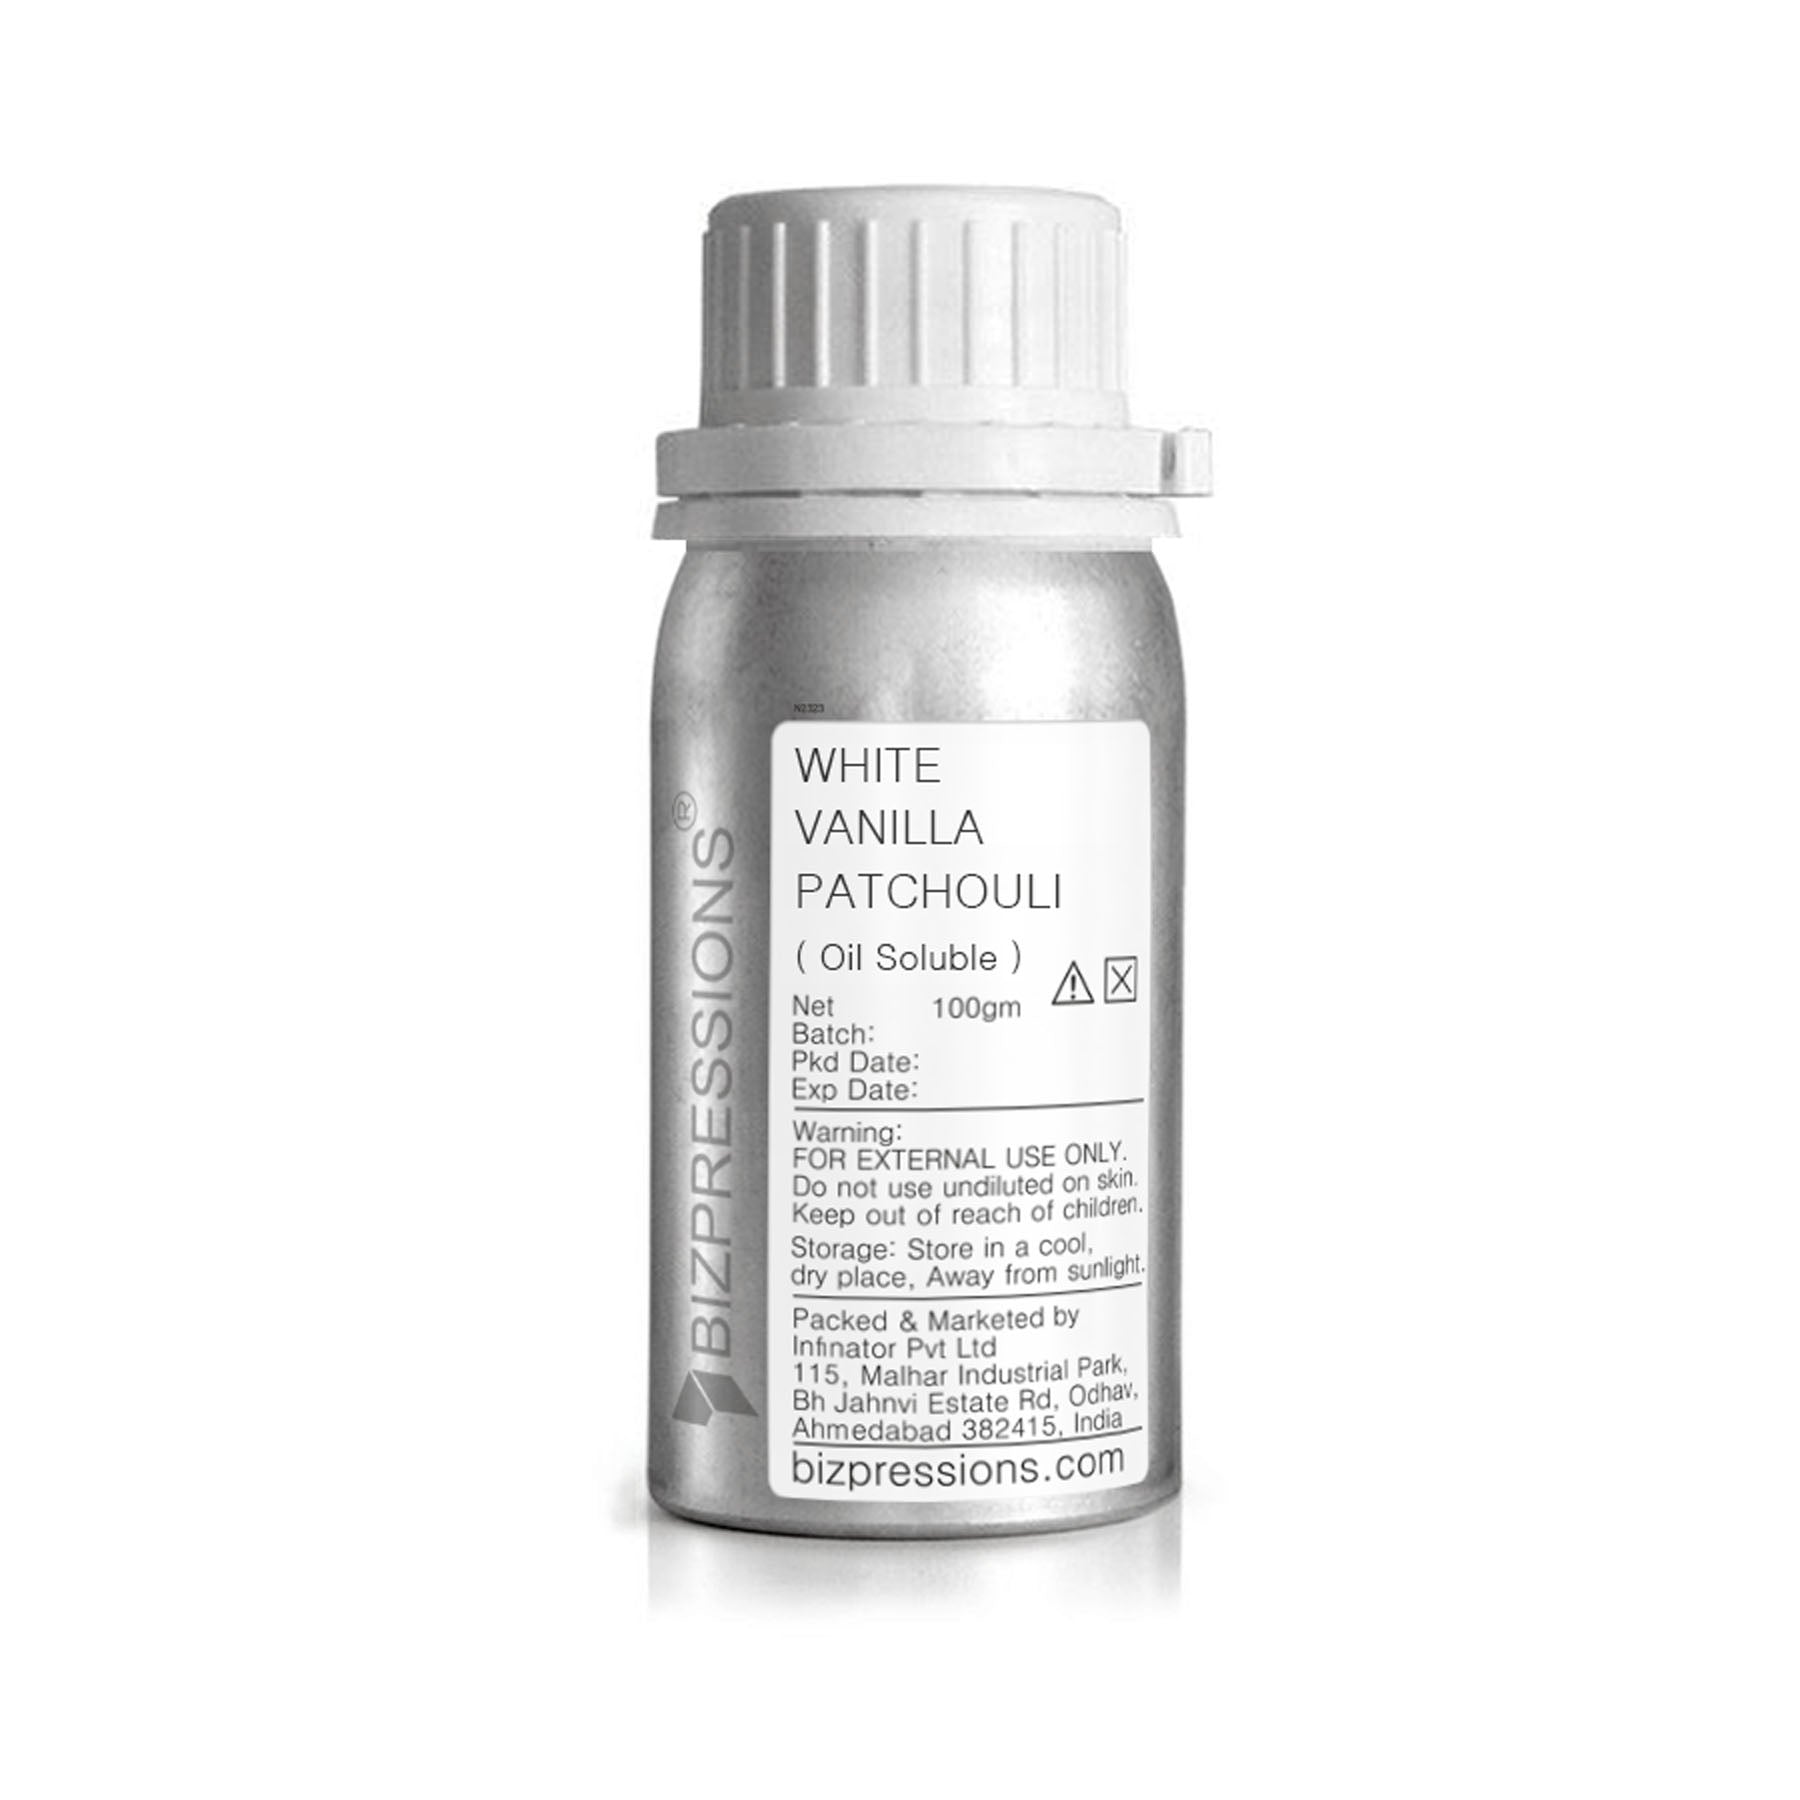 WHITE VANILLA PATCHOULI - Fragrance ( Oil Soluble ) - 100 gm